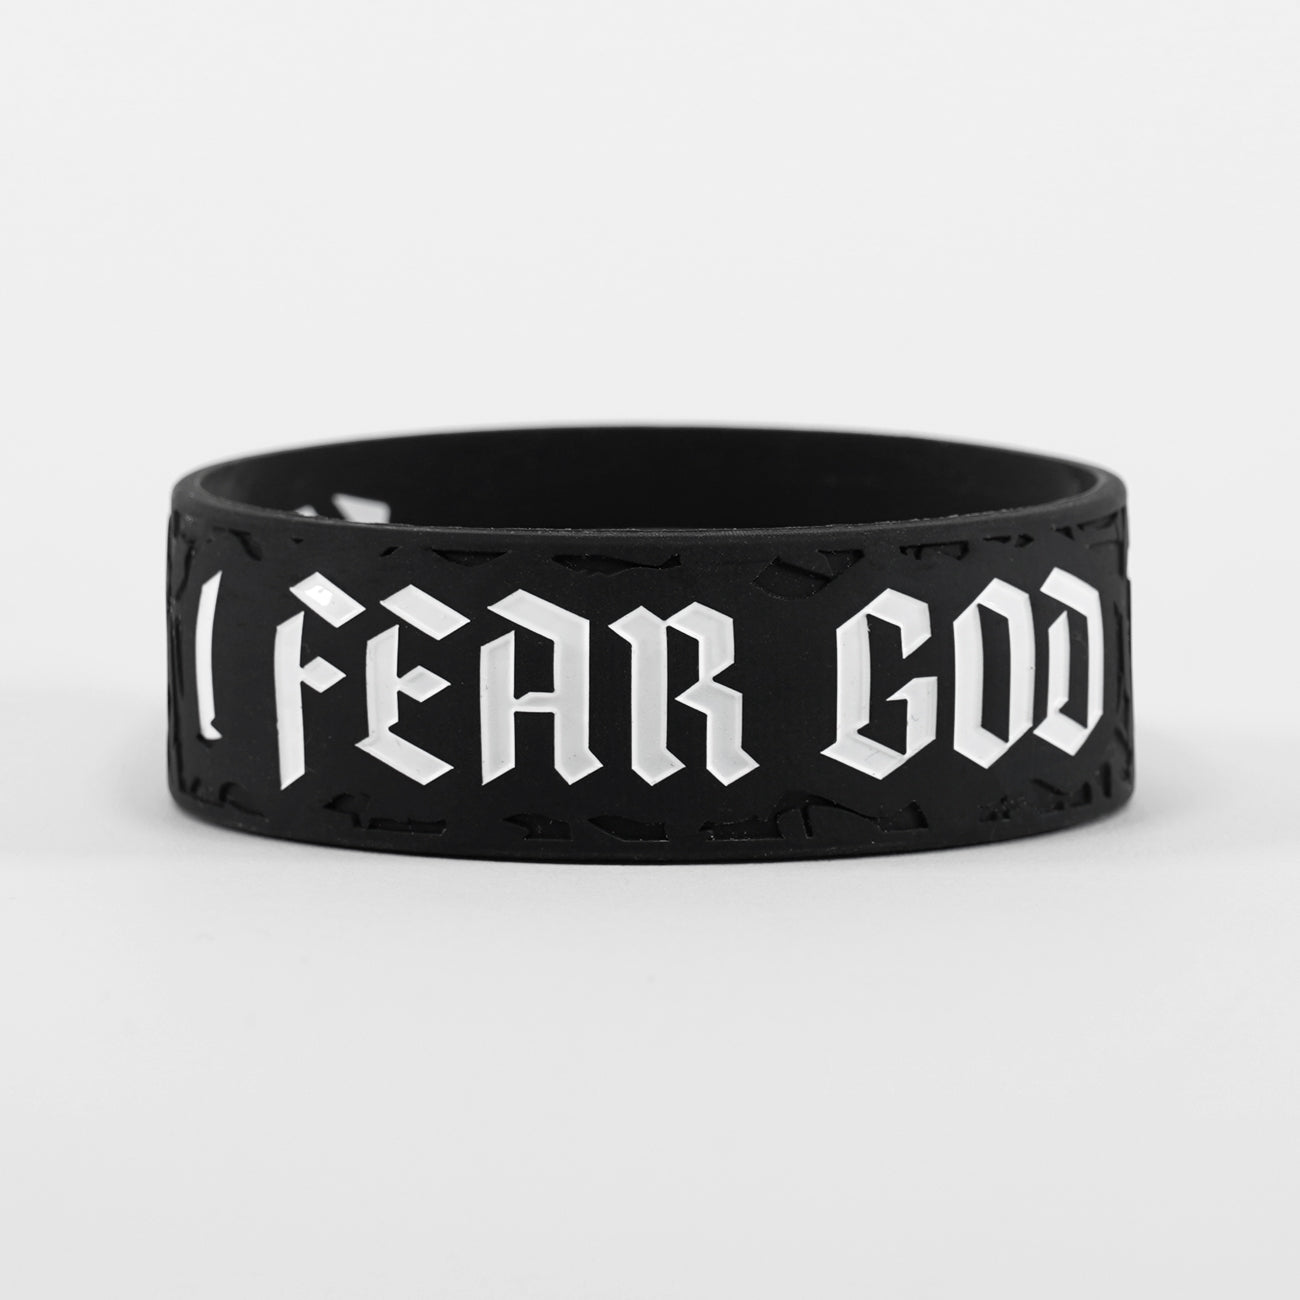 I Fear God 1 Inch Wristband